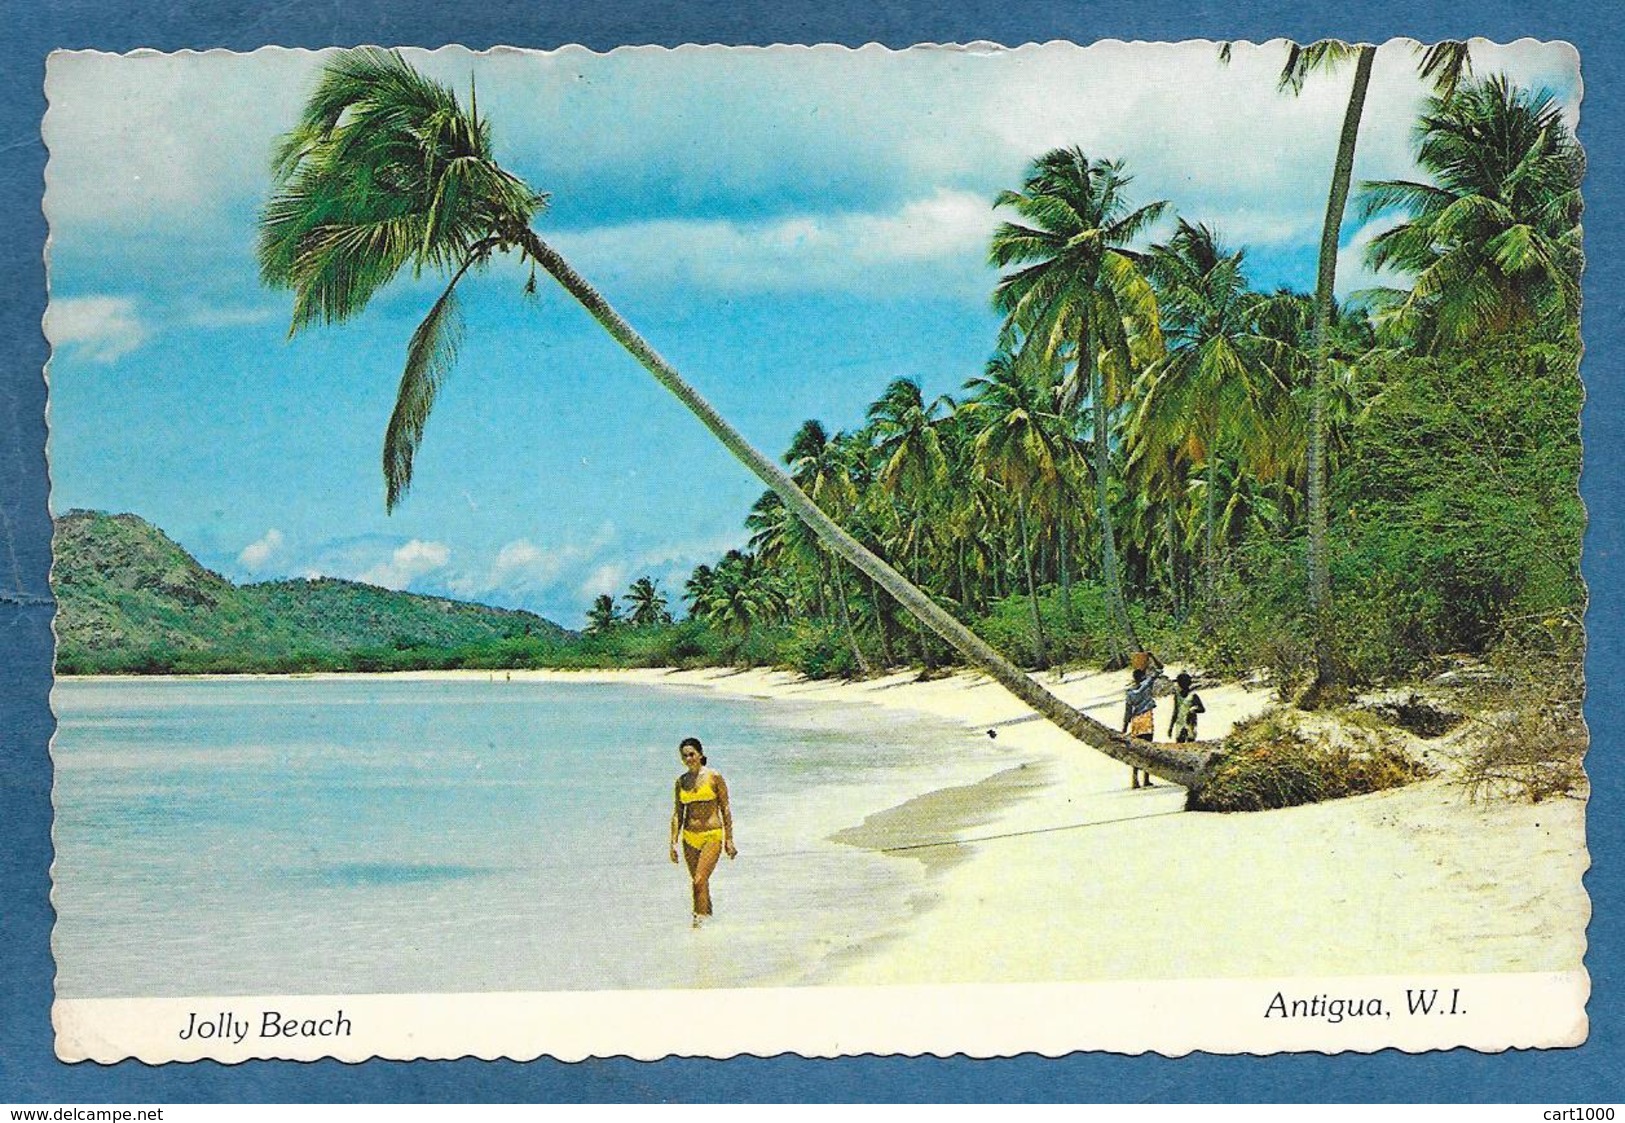 ANTIGUA WEST INDIES JOLLY BEACH 1982 - Antigua E Barbuda